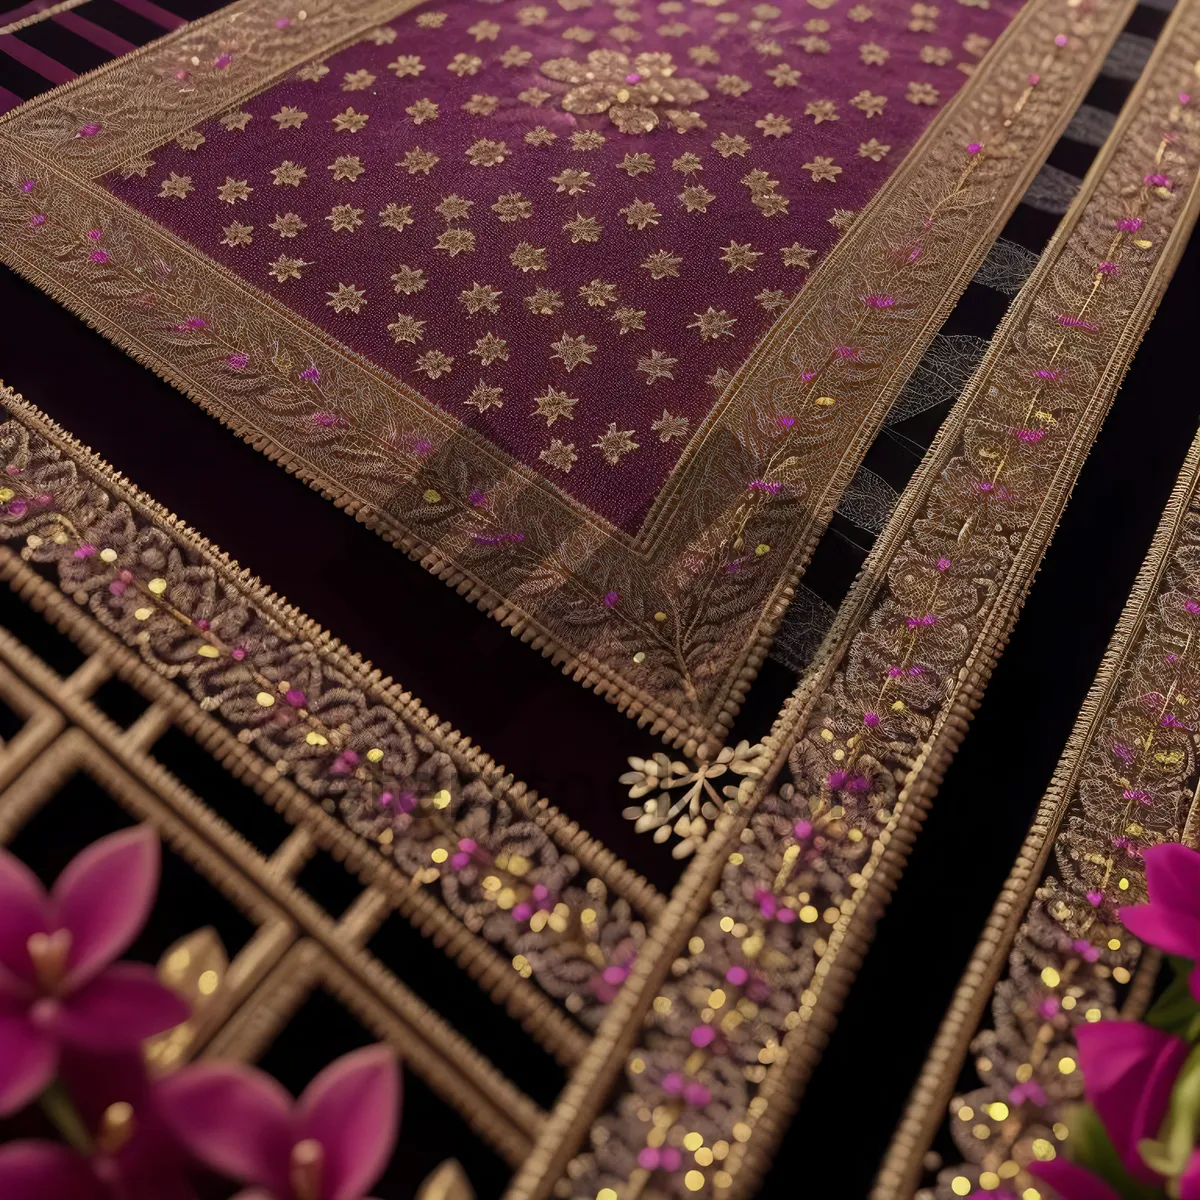 Picture of Ancient Arabesque Prayer Rug: Exquisite Floor Cover